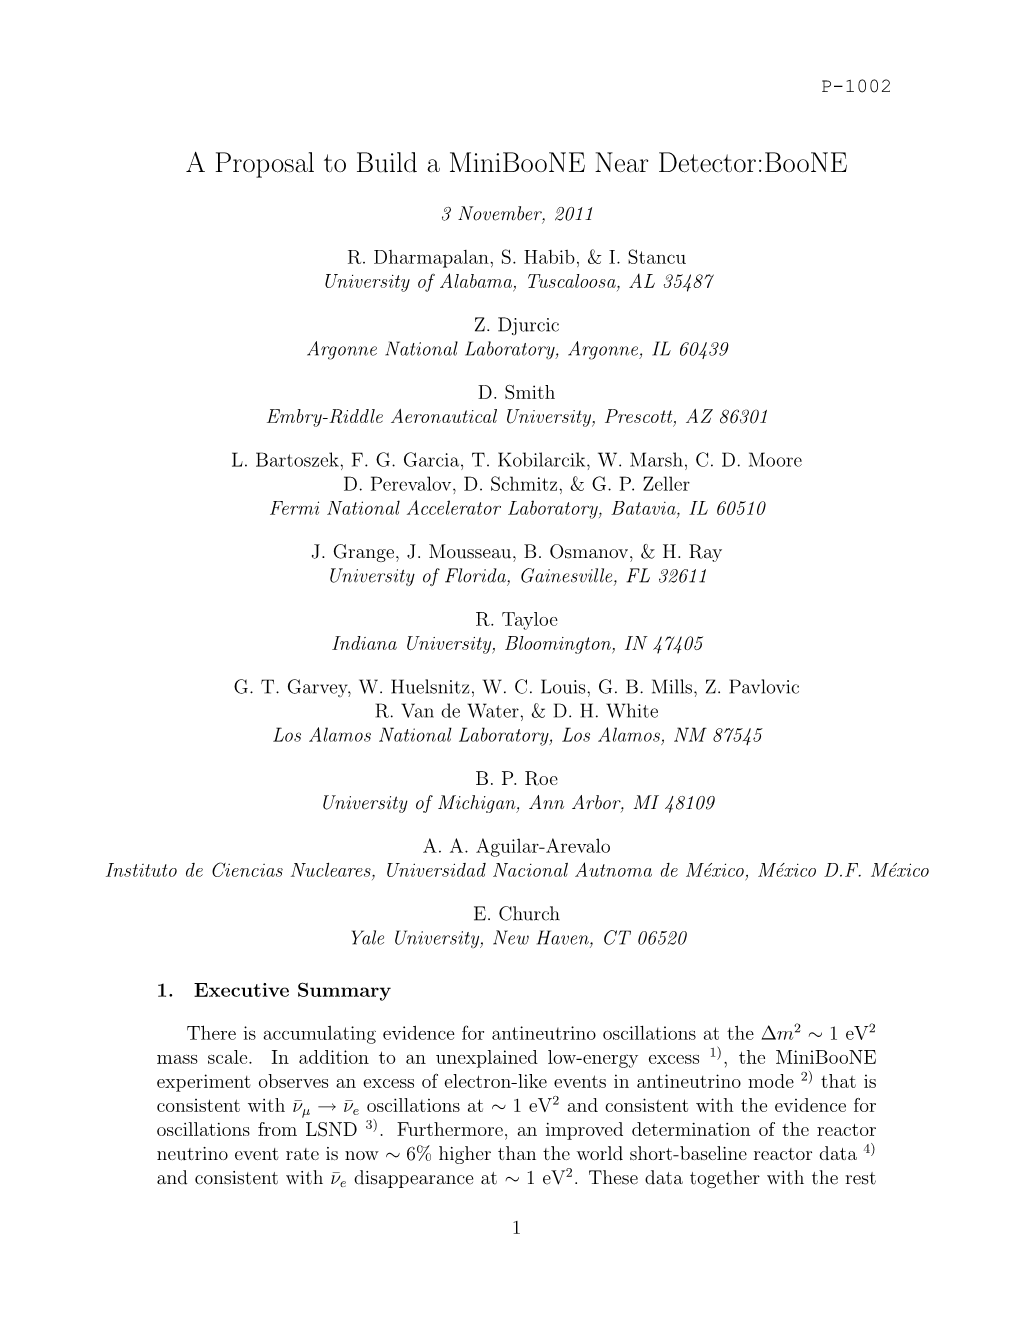 A Proposal to Build a Miniboone Near Detector:Boone